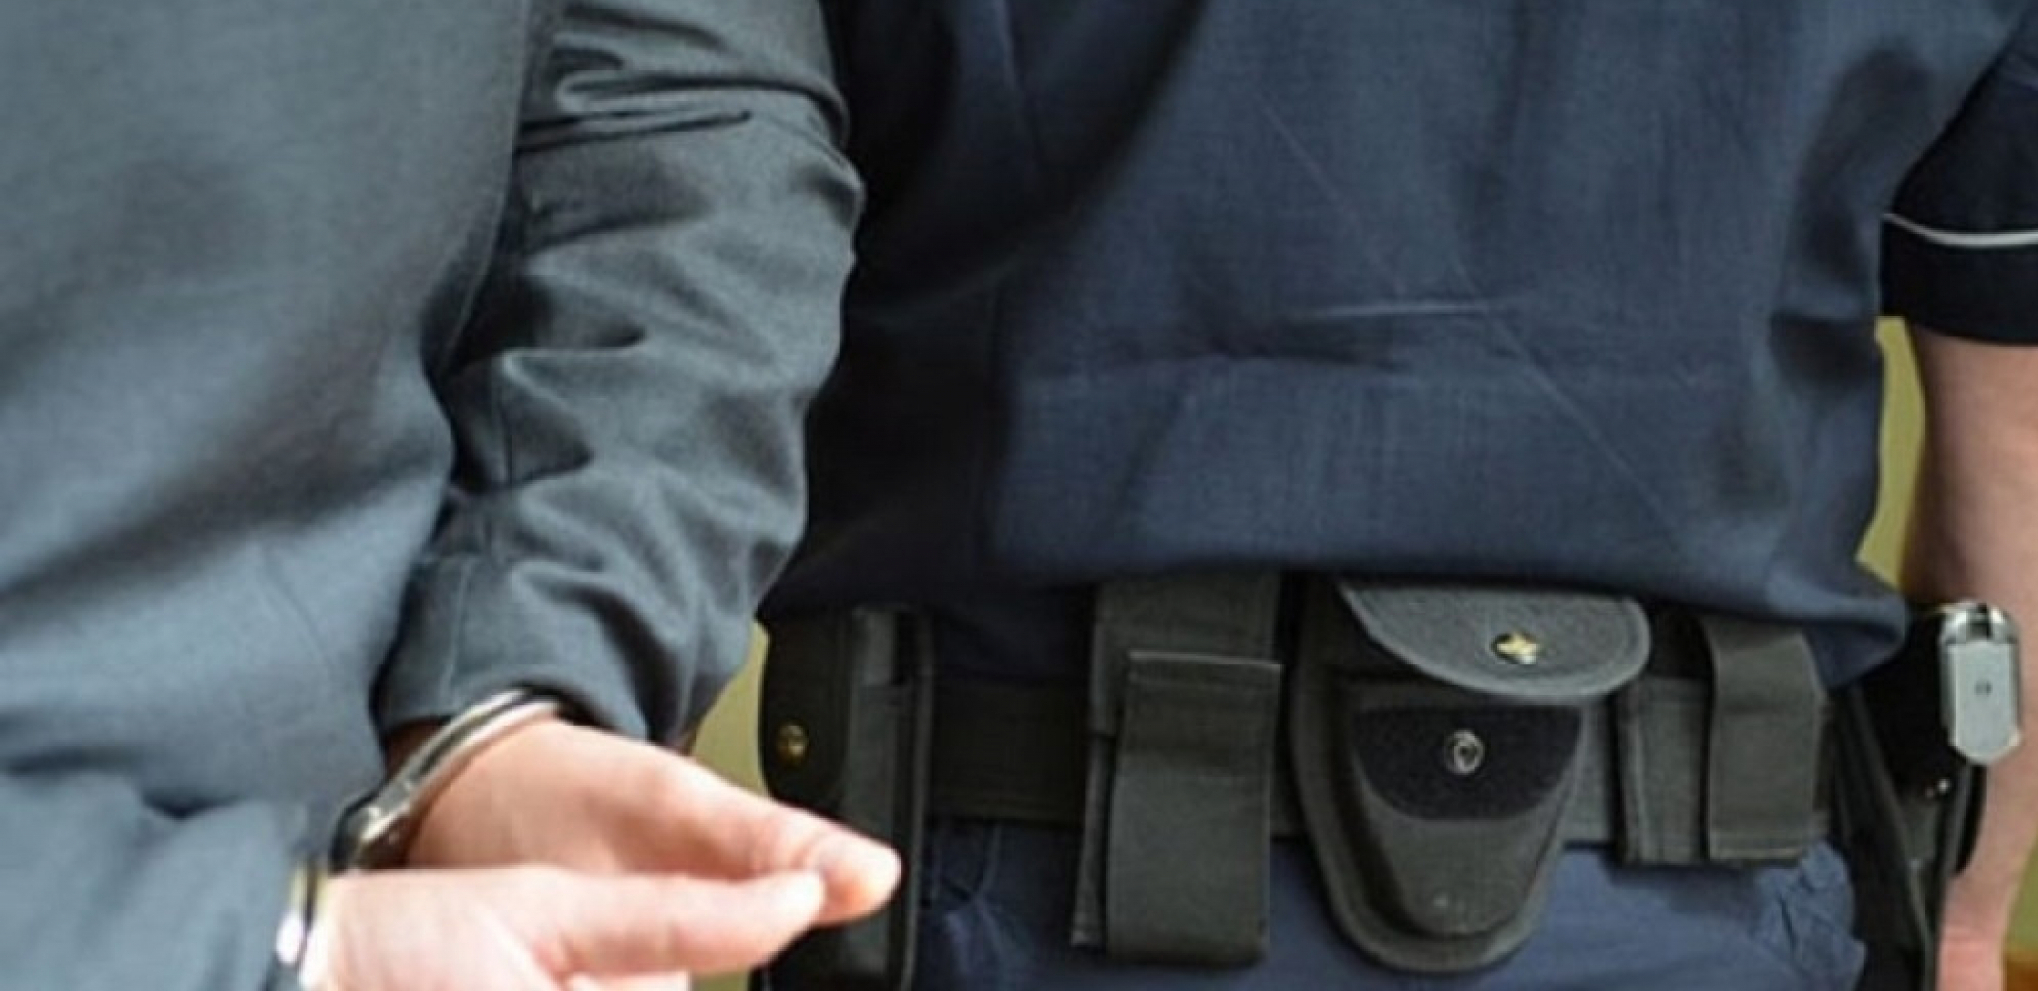 UHAPŠEN DILER IZ ARANĐELOVCA Policija zaplenila više od 30 kilograma droge